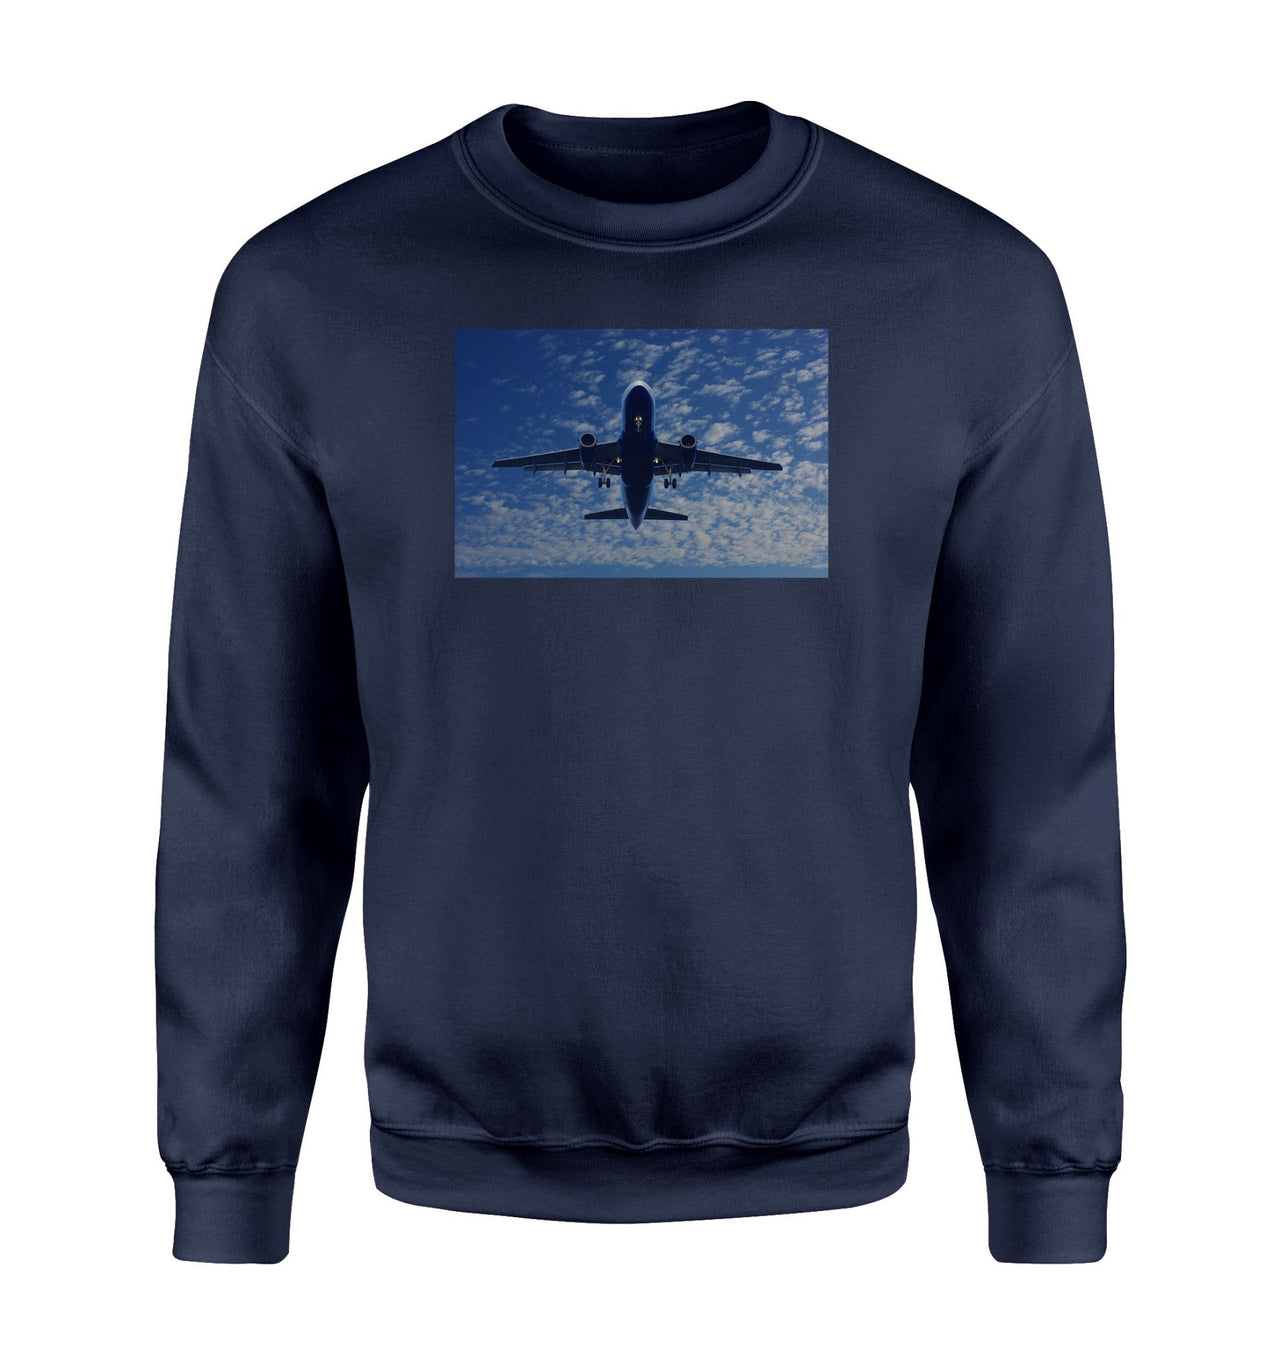 Airplane From Below Designed Sweatshirts